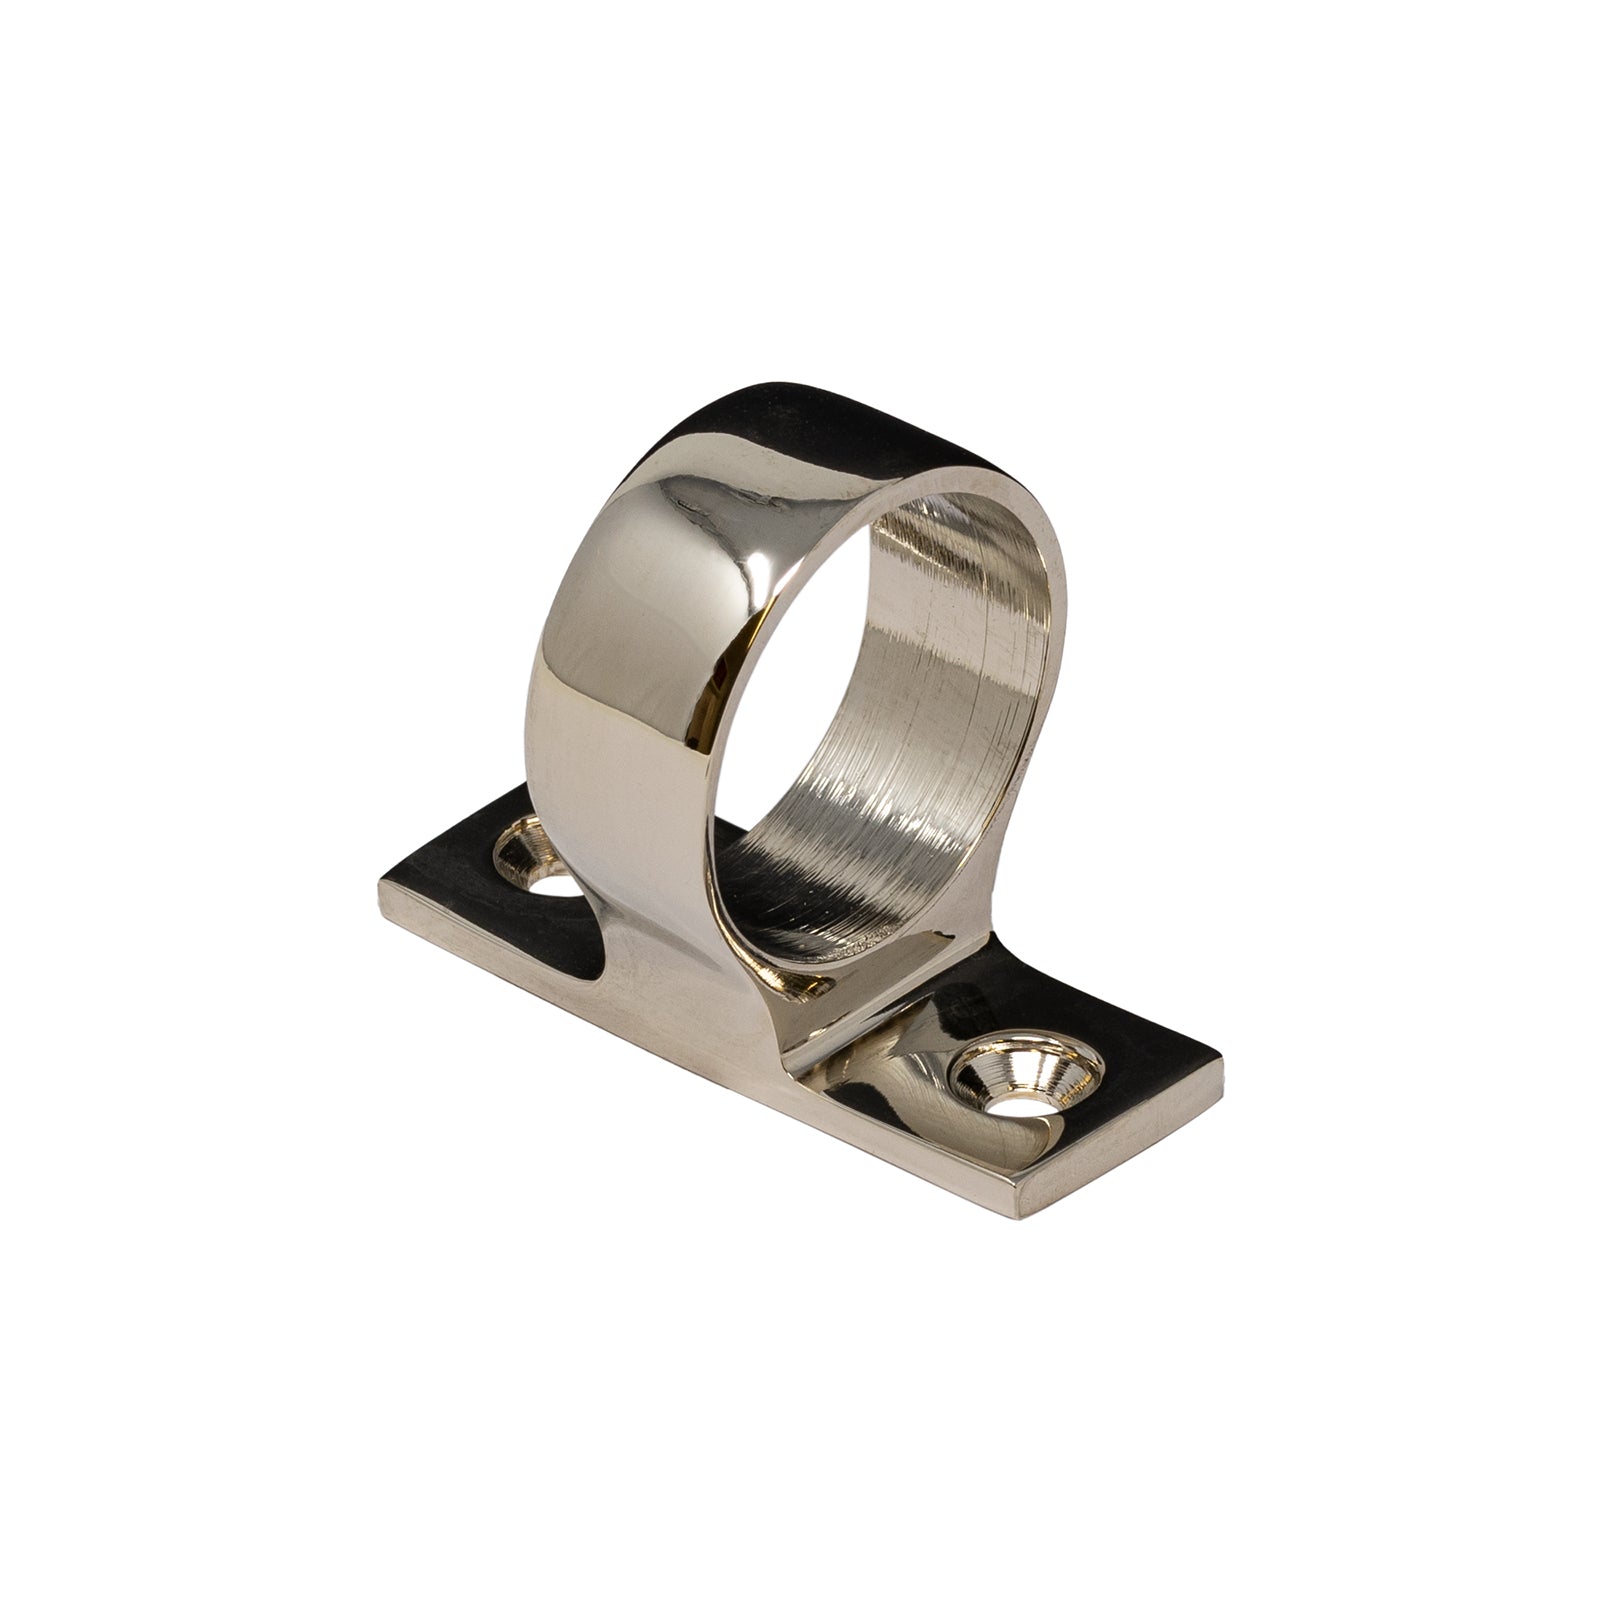 Sash Ring Pull Lift in Polished Nickel Finish SHOW